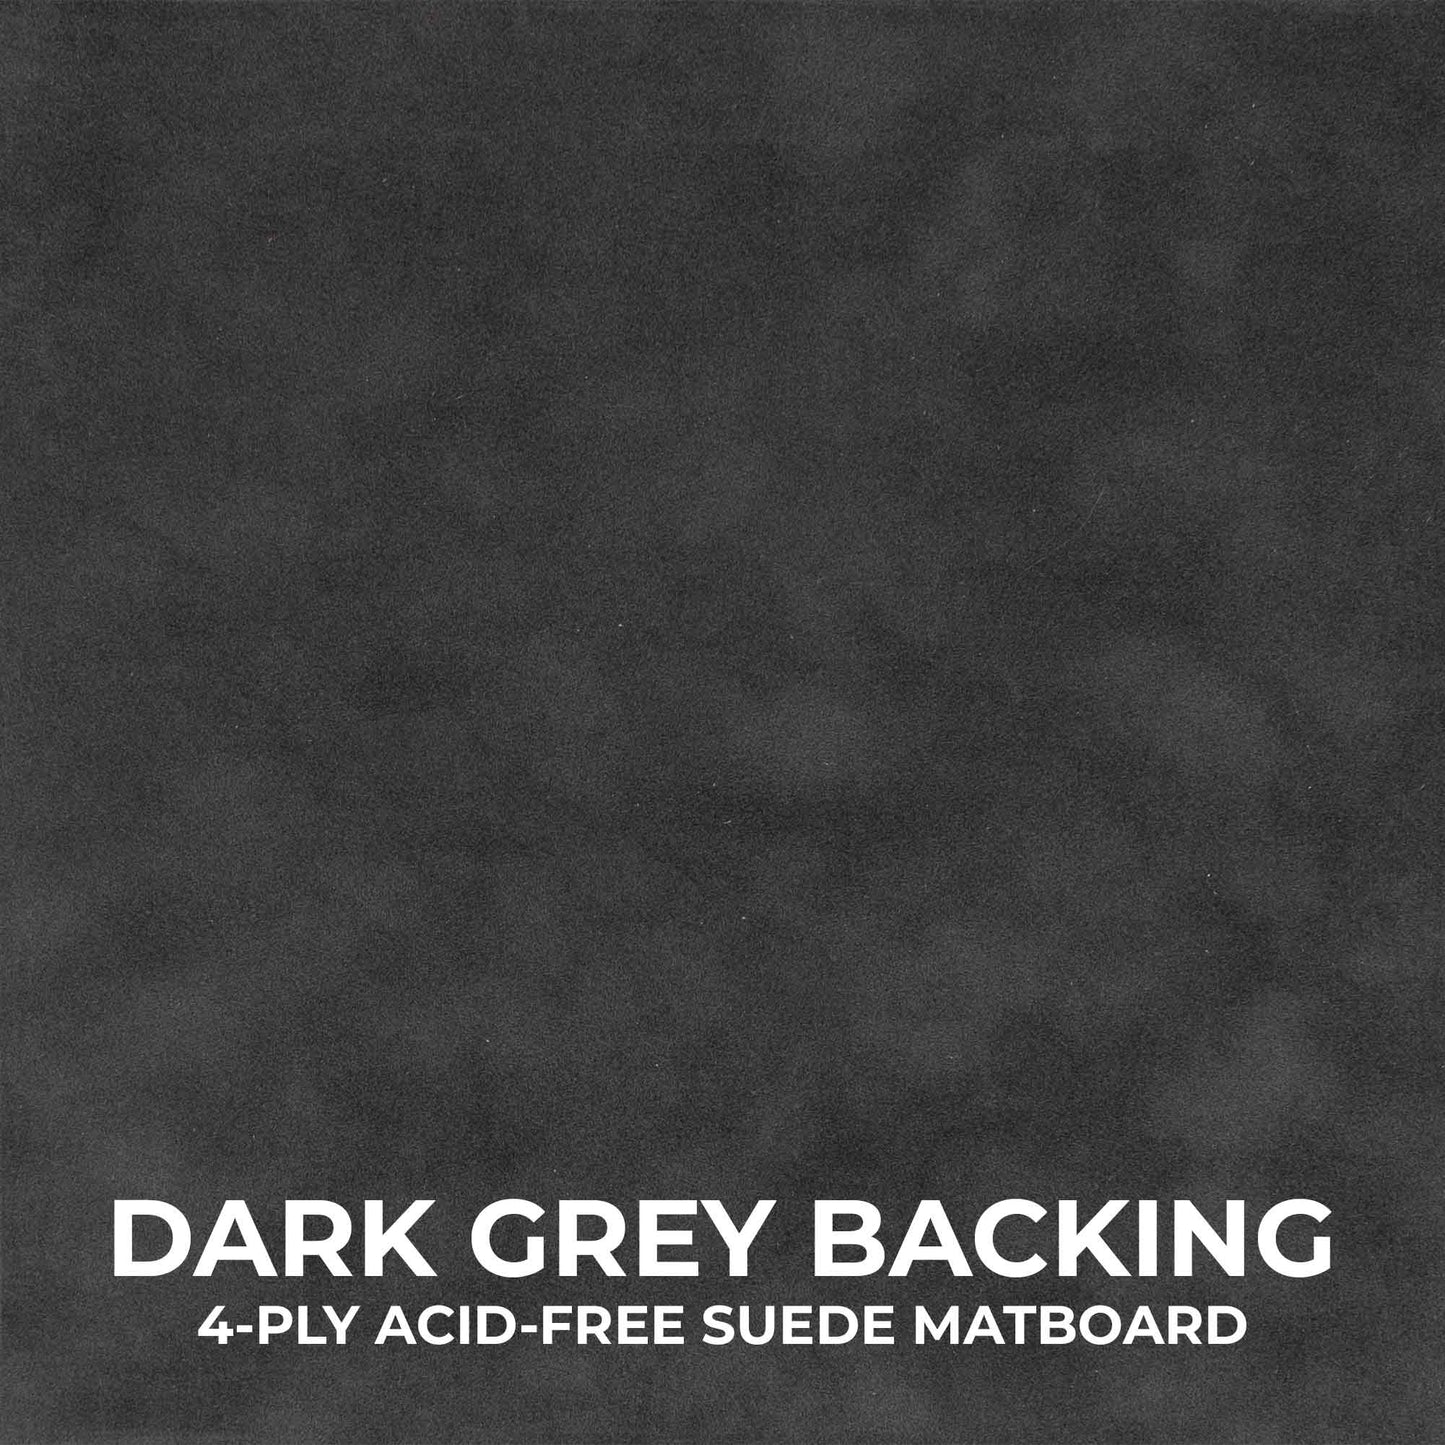 White Shadow Box Frame With Dark Grey Acid-Free Suede Backing